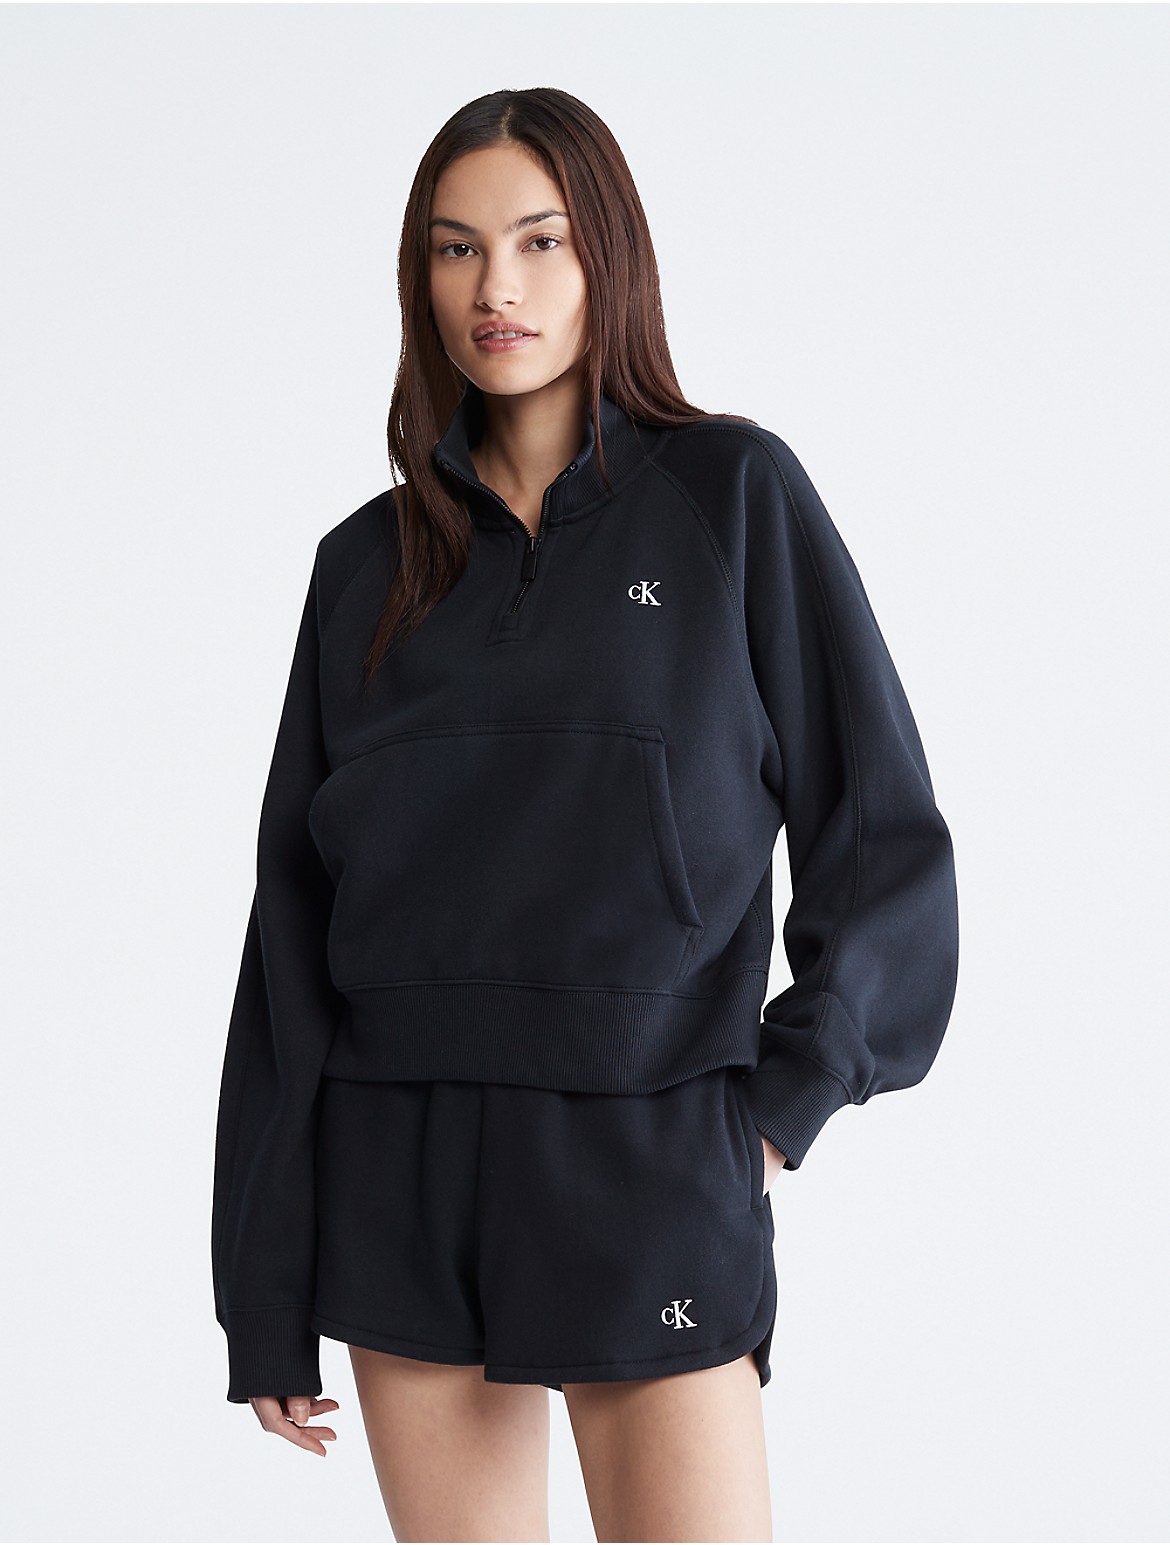 Calvin Klein Women's Archive Logo Fleece Sweatshirt - Black - XS